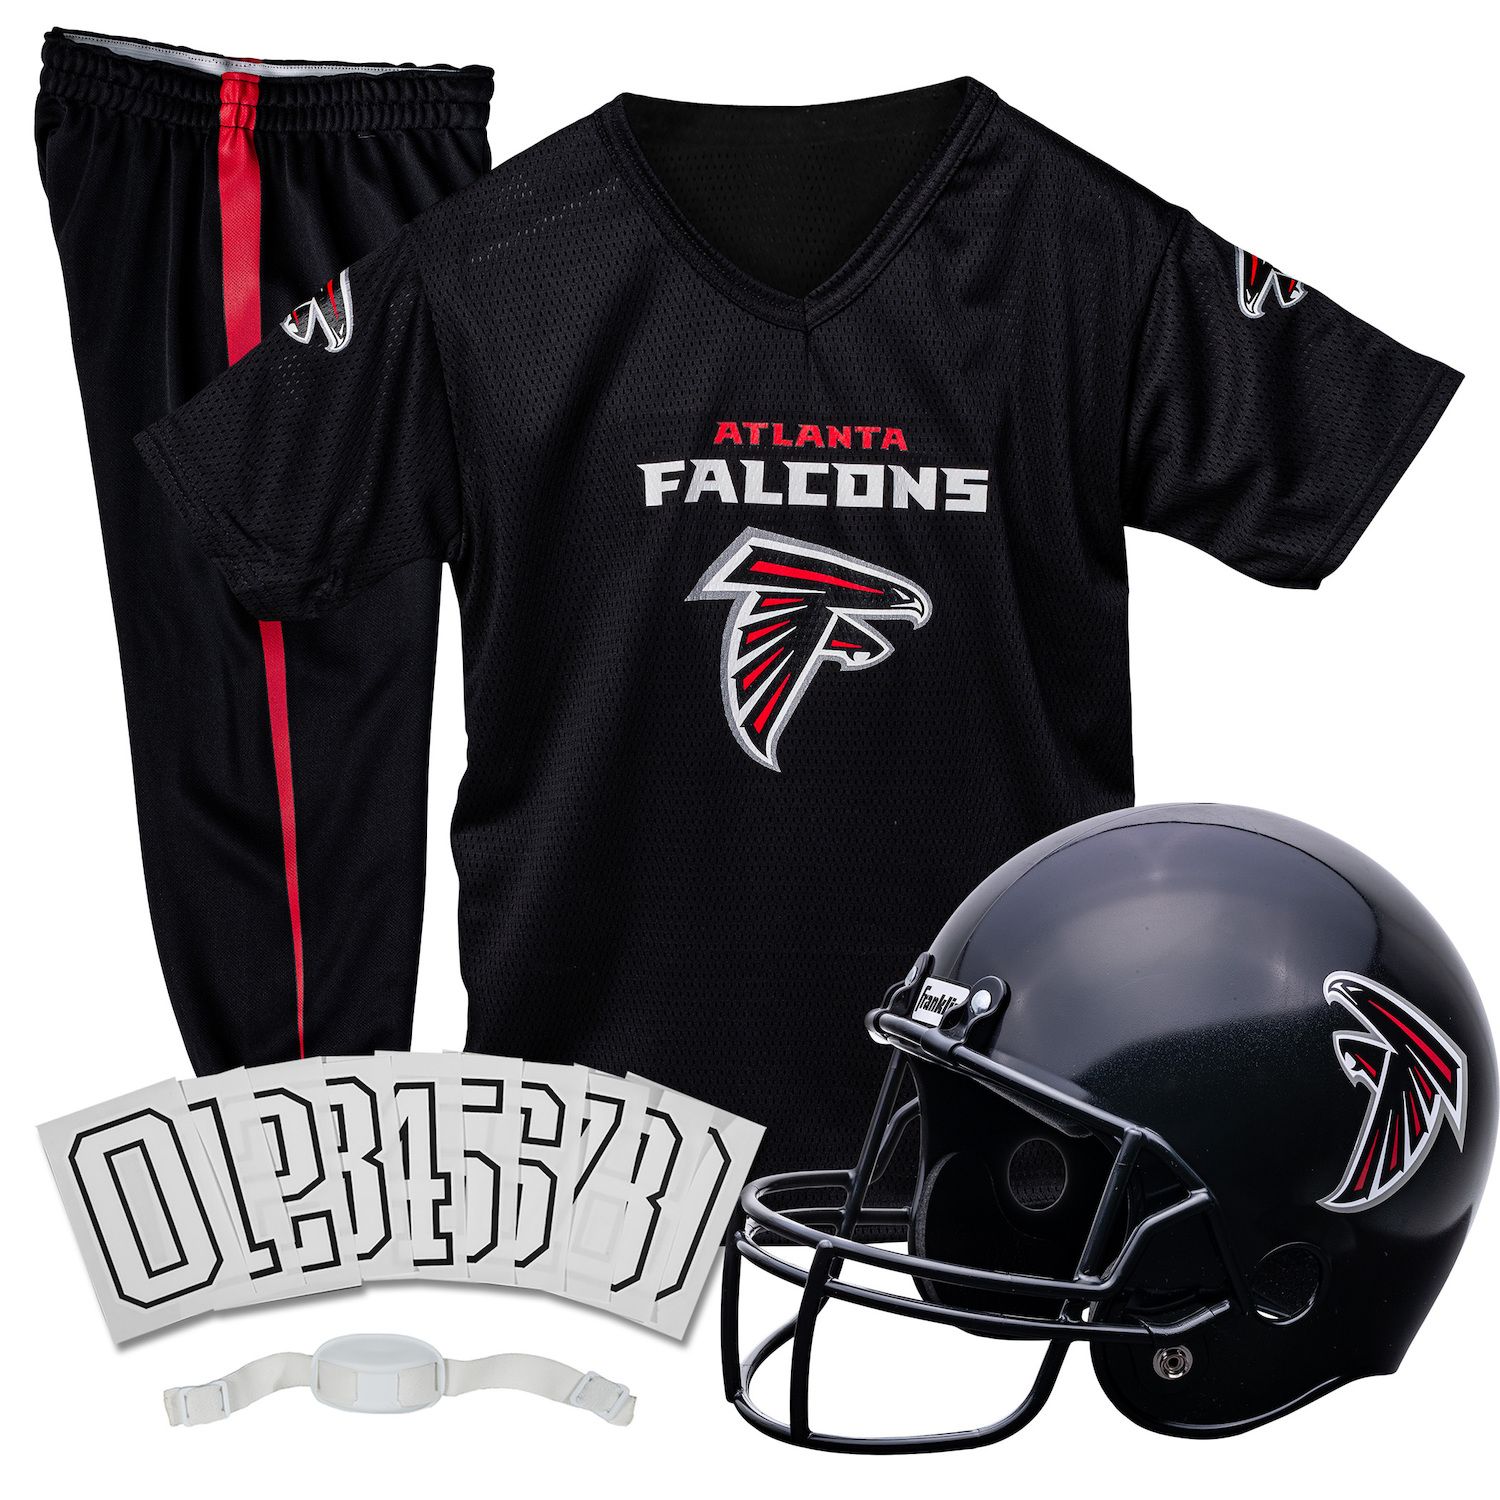 Atlanta Falcons Alternate Jersey